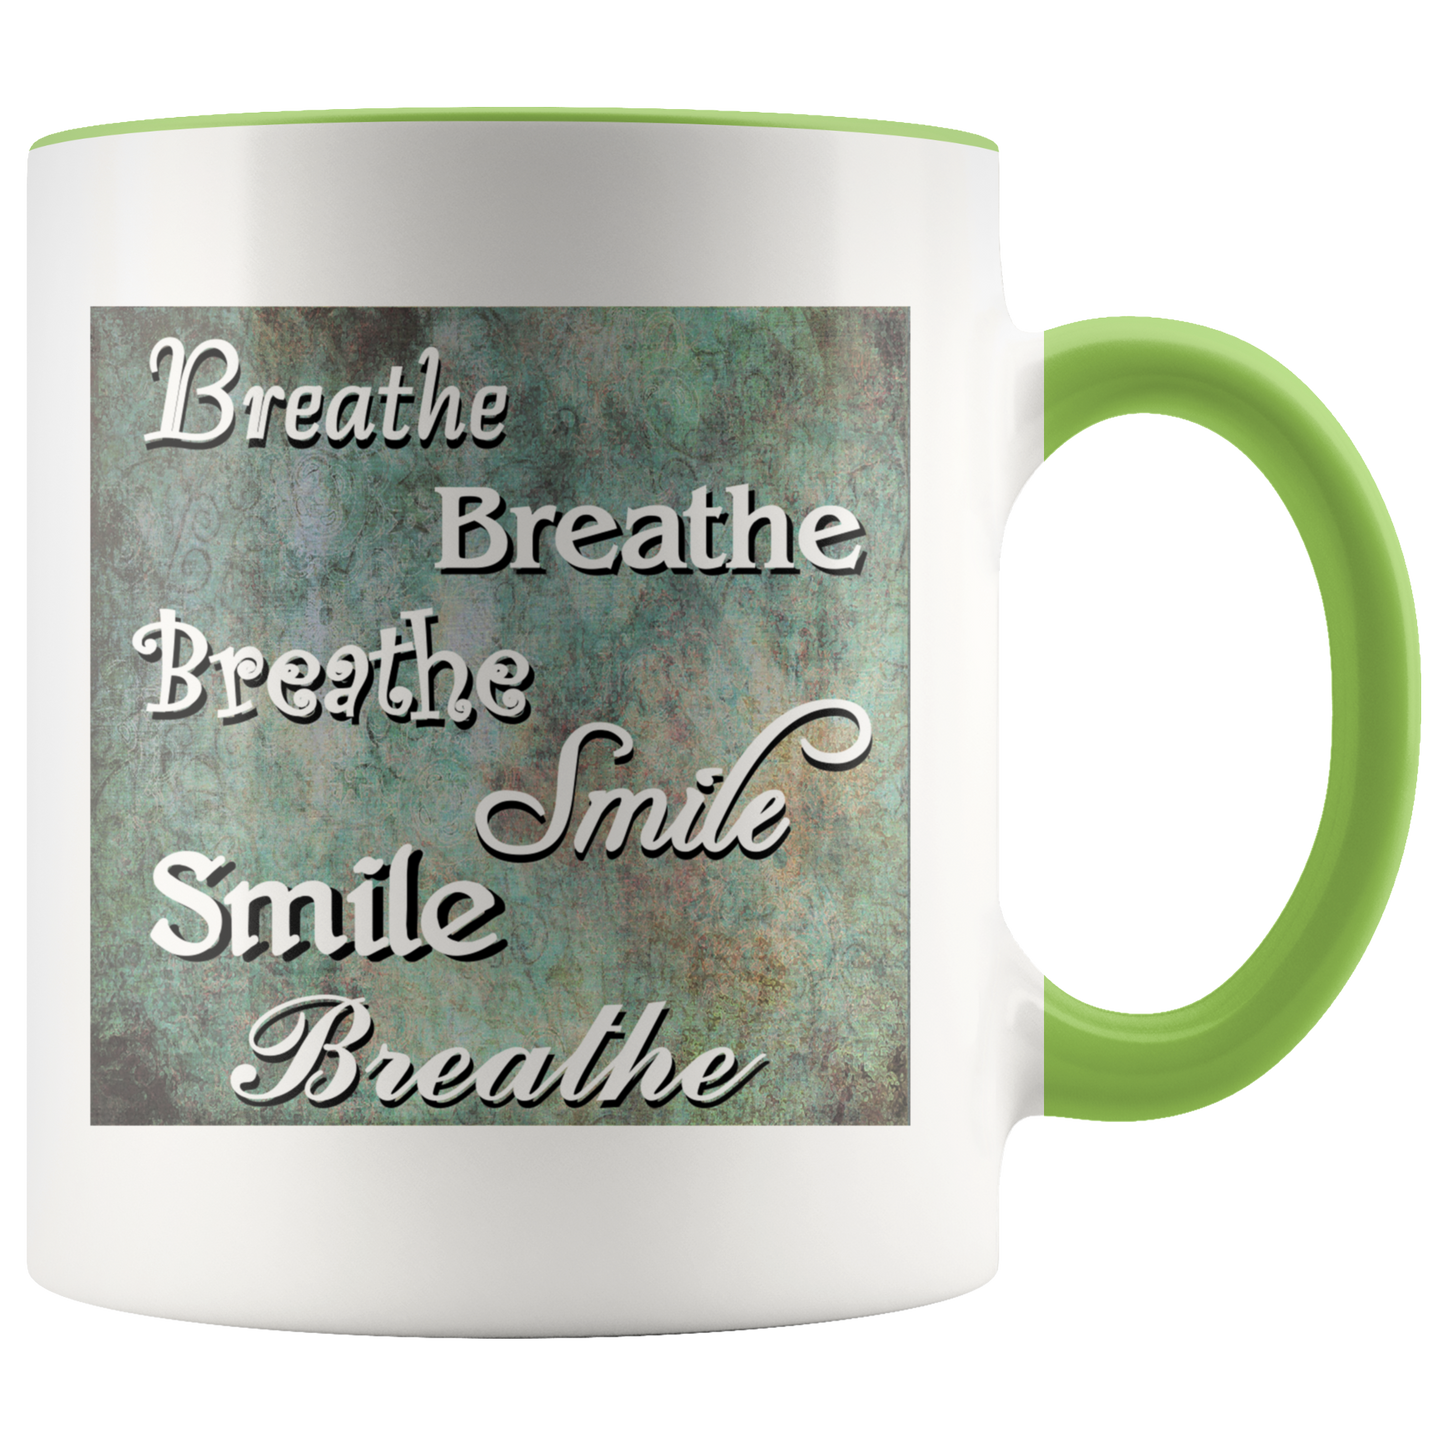 Beathe Smile Breathe - Inspirational Saying Coffee Mug